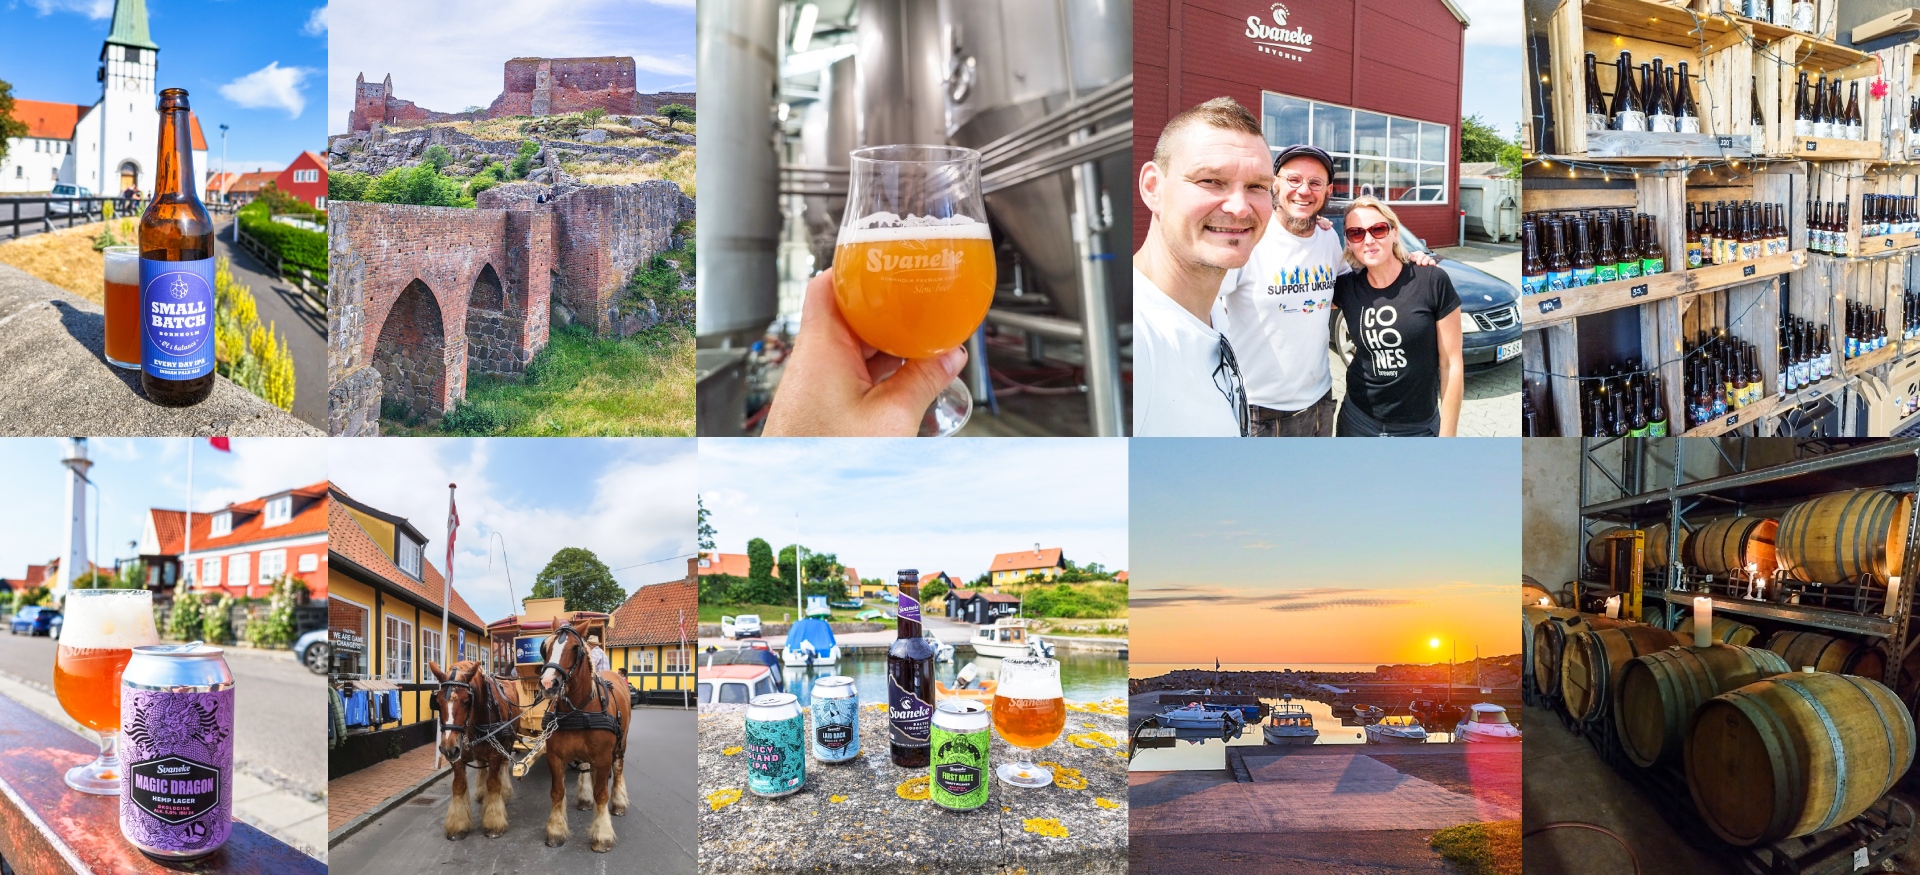 Craft beer pictures from Bornholm island, Denmark | Craft Beer Nomads